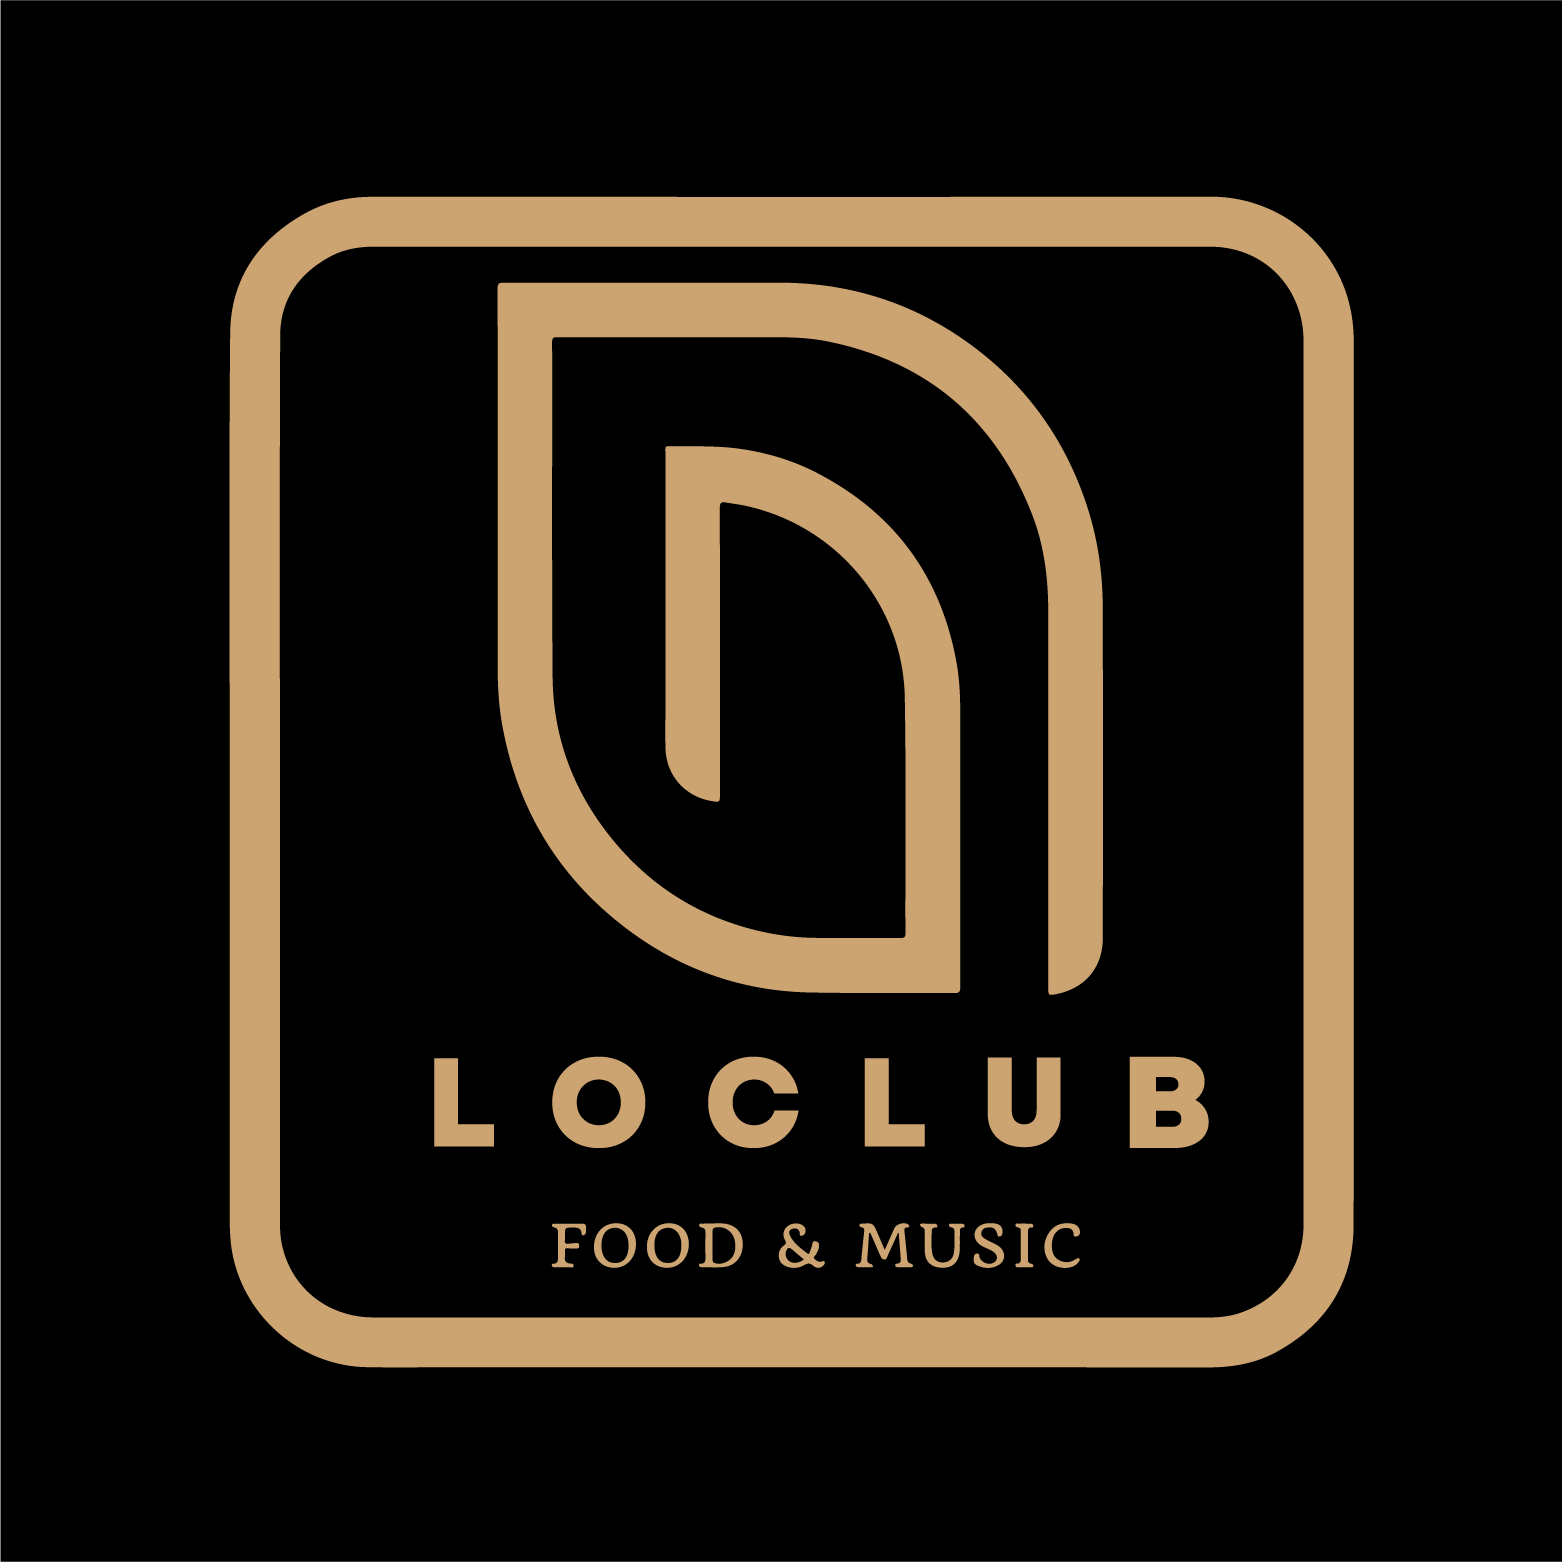 LOCLUB - Food & Music